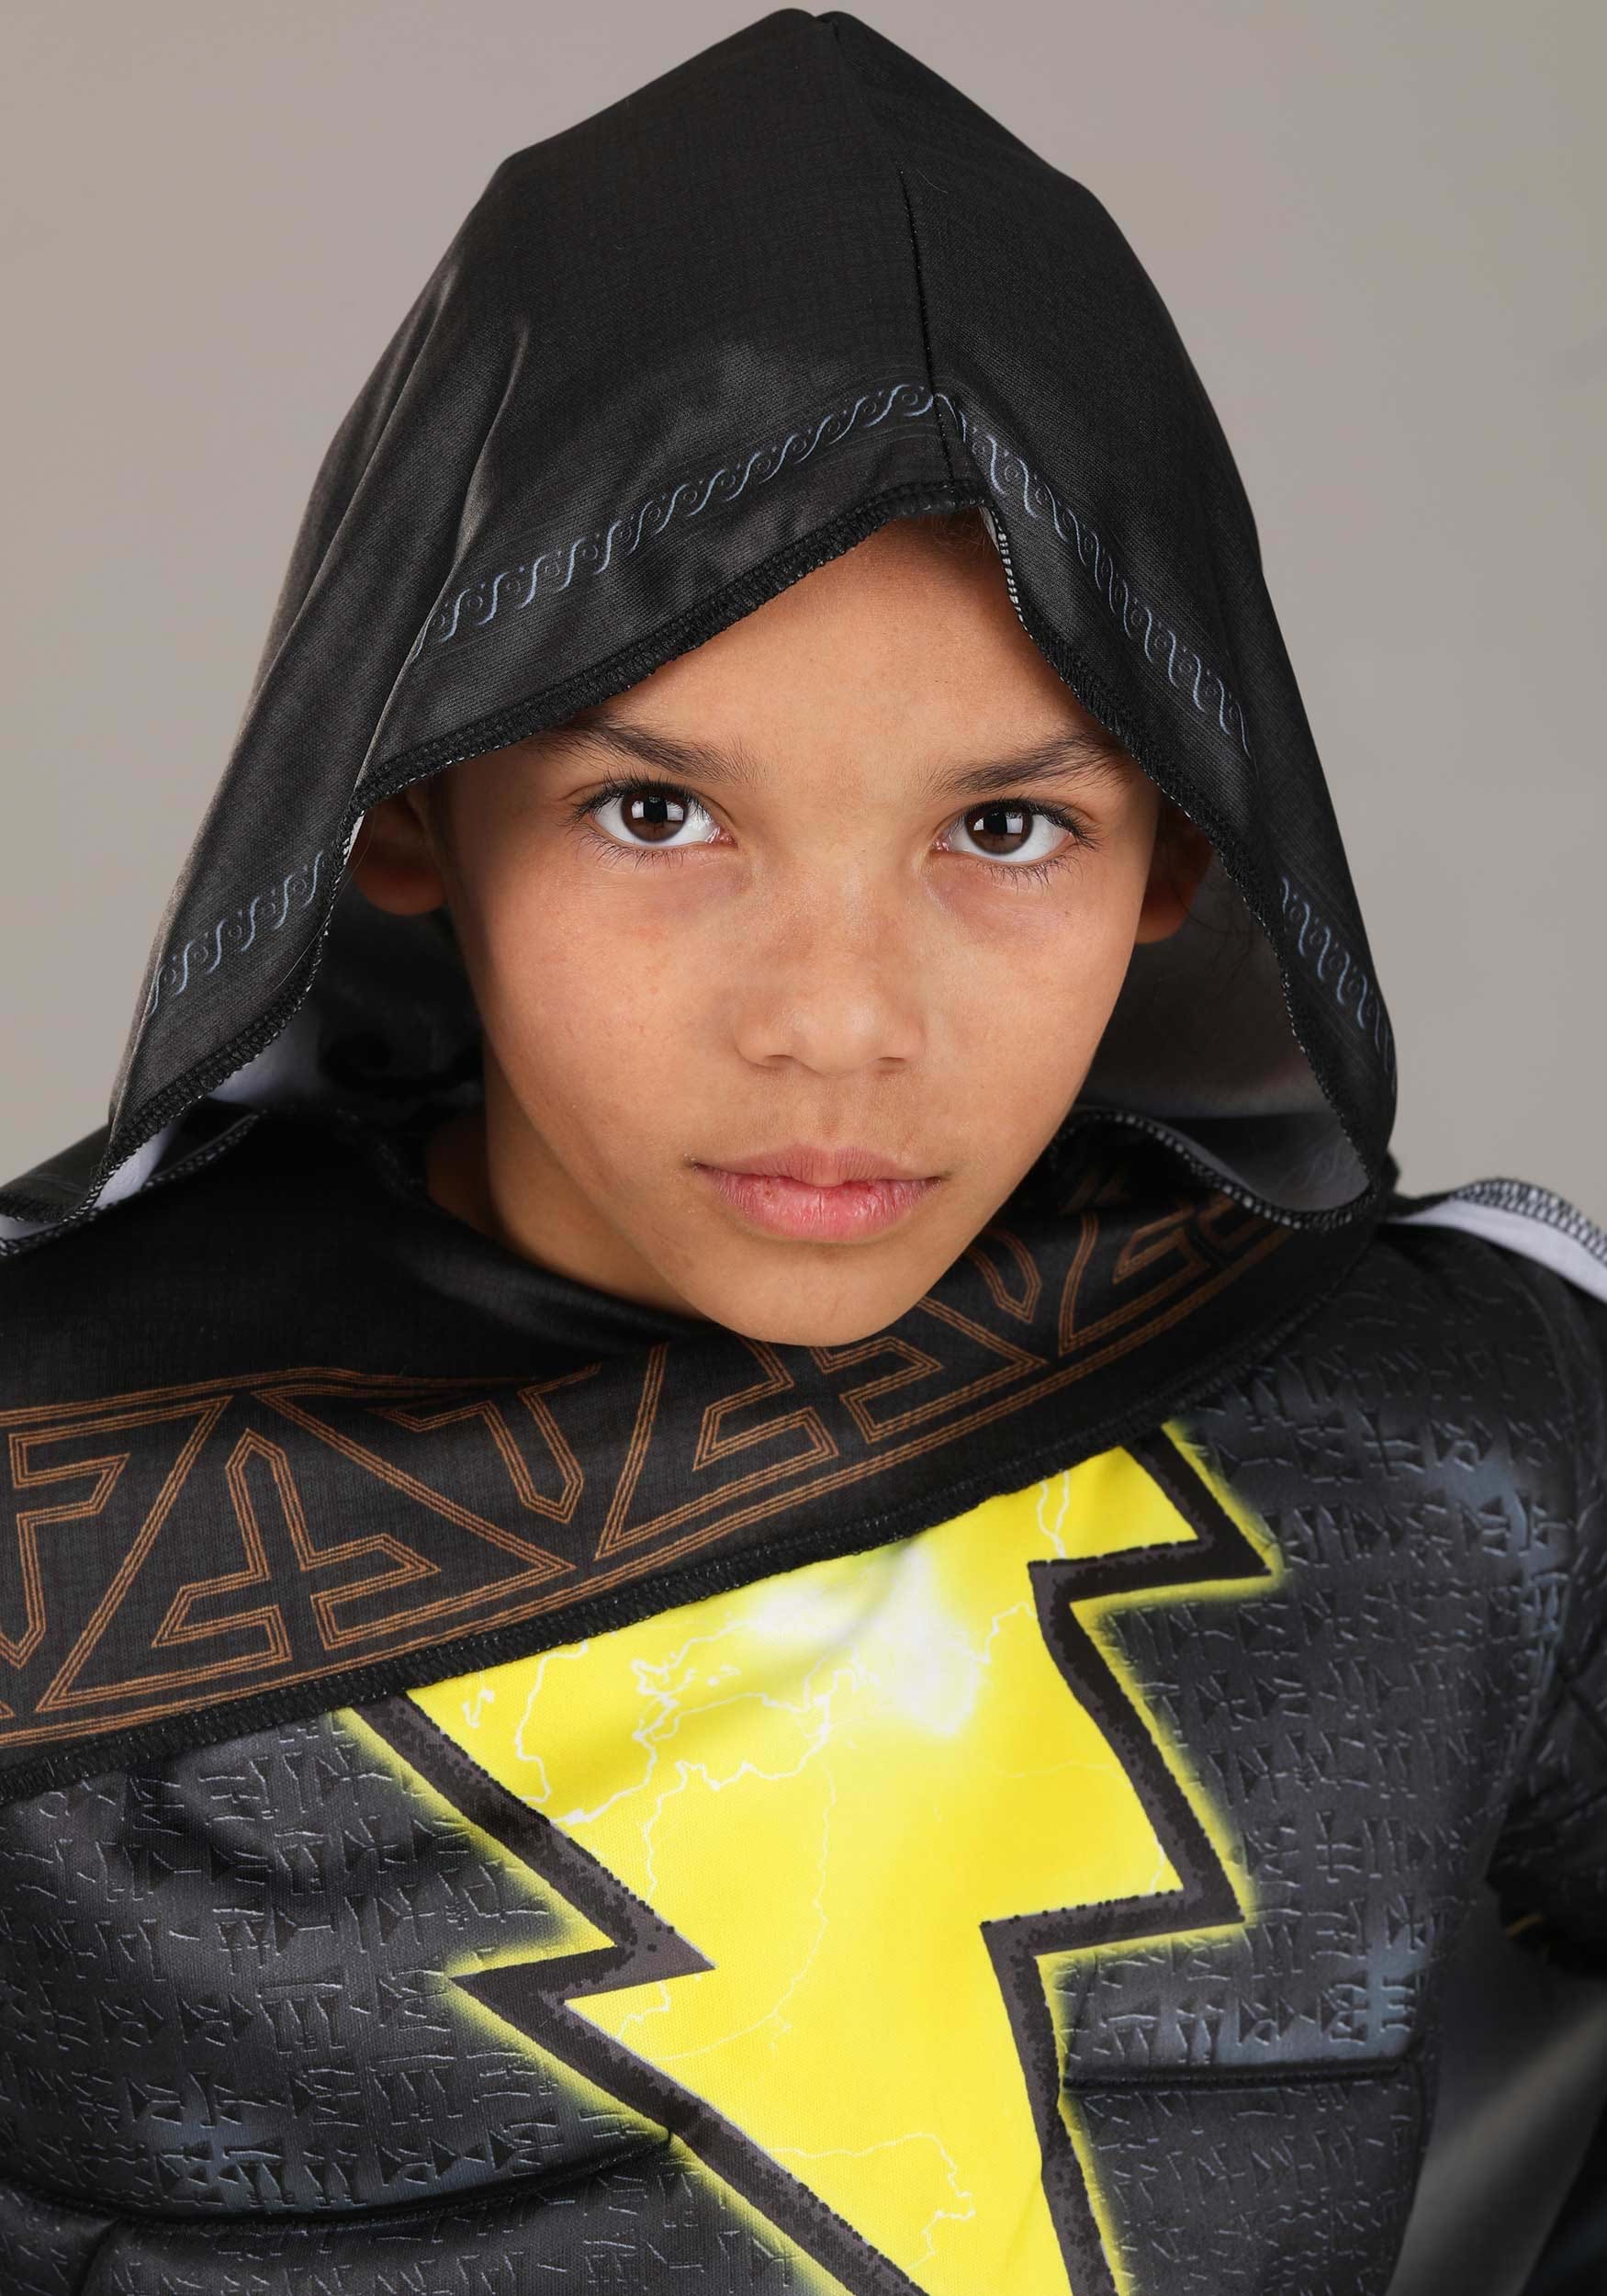 Kid's Black Adam Deluxe Costume , Boy's Superhero Costumes